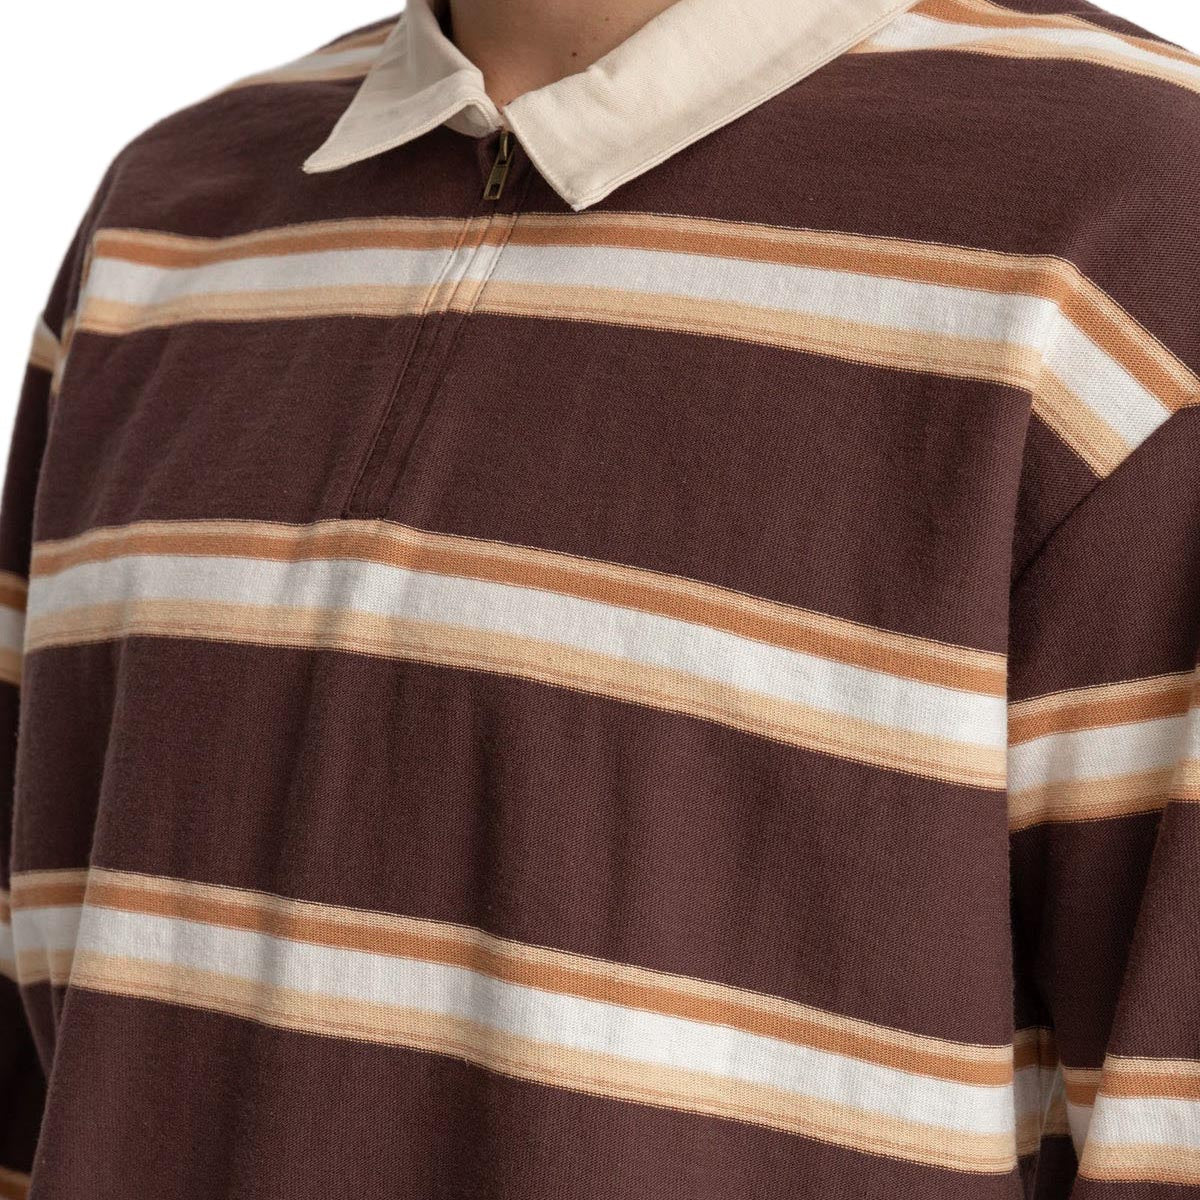 Rhythm Vintage Stripe Polo Long Sleeve Shirt - Chocolate image 3